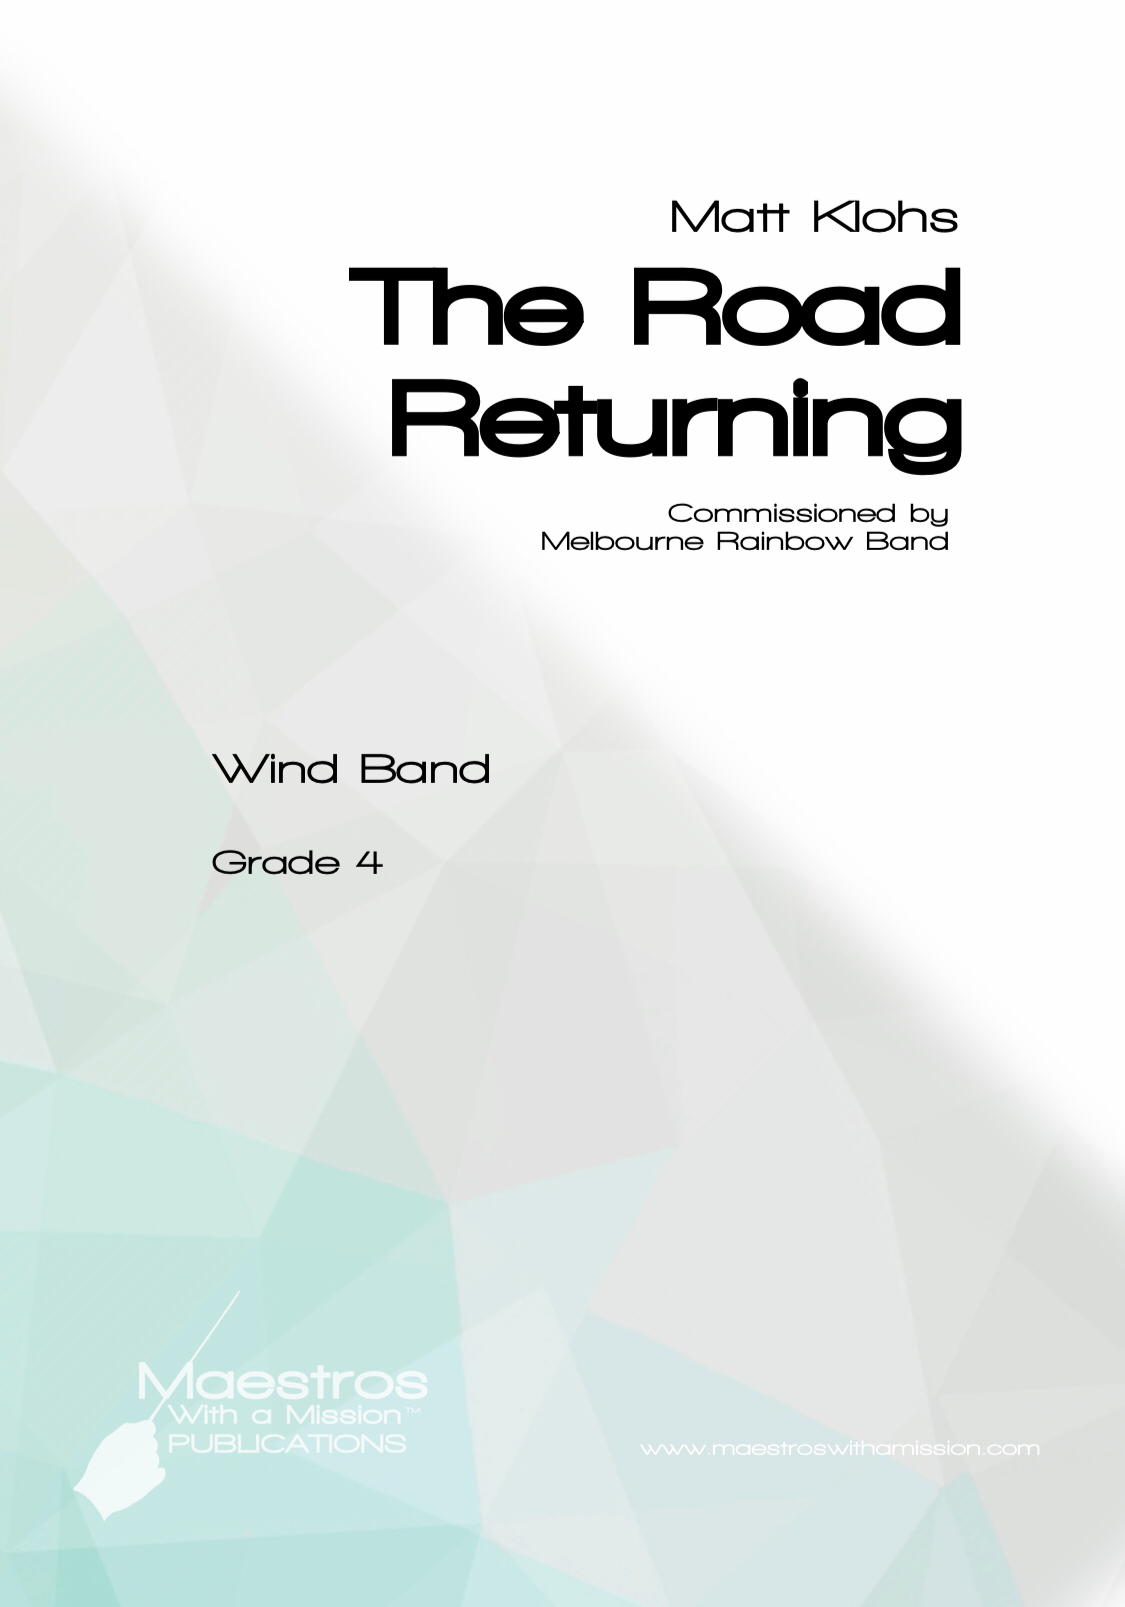 The Road Returning by Matt Klohs